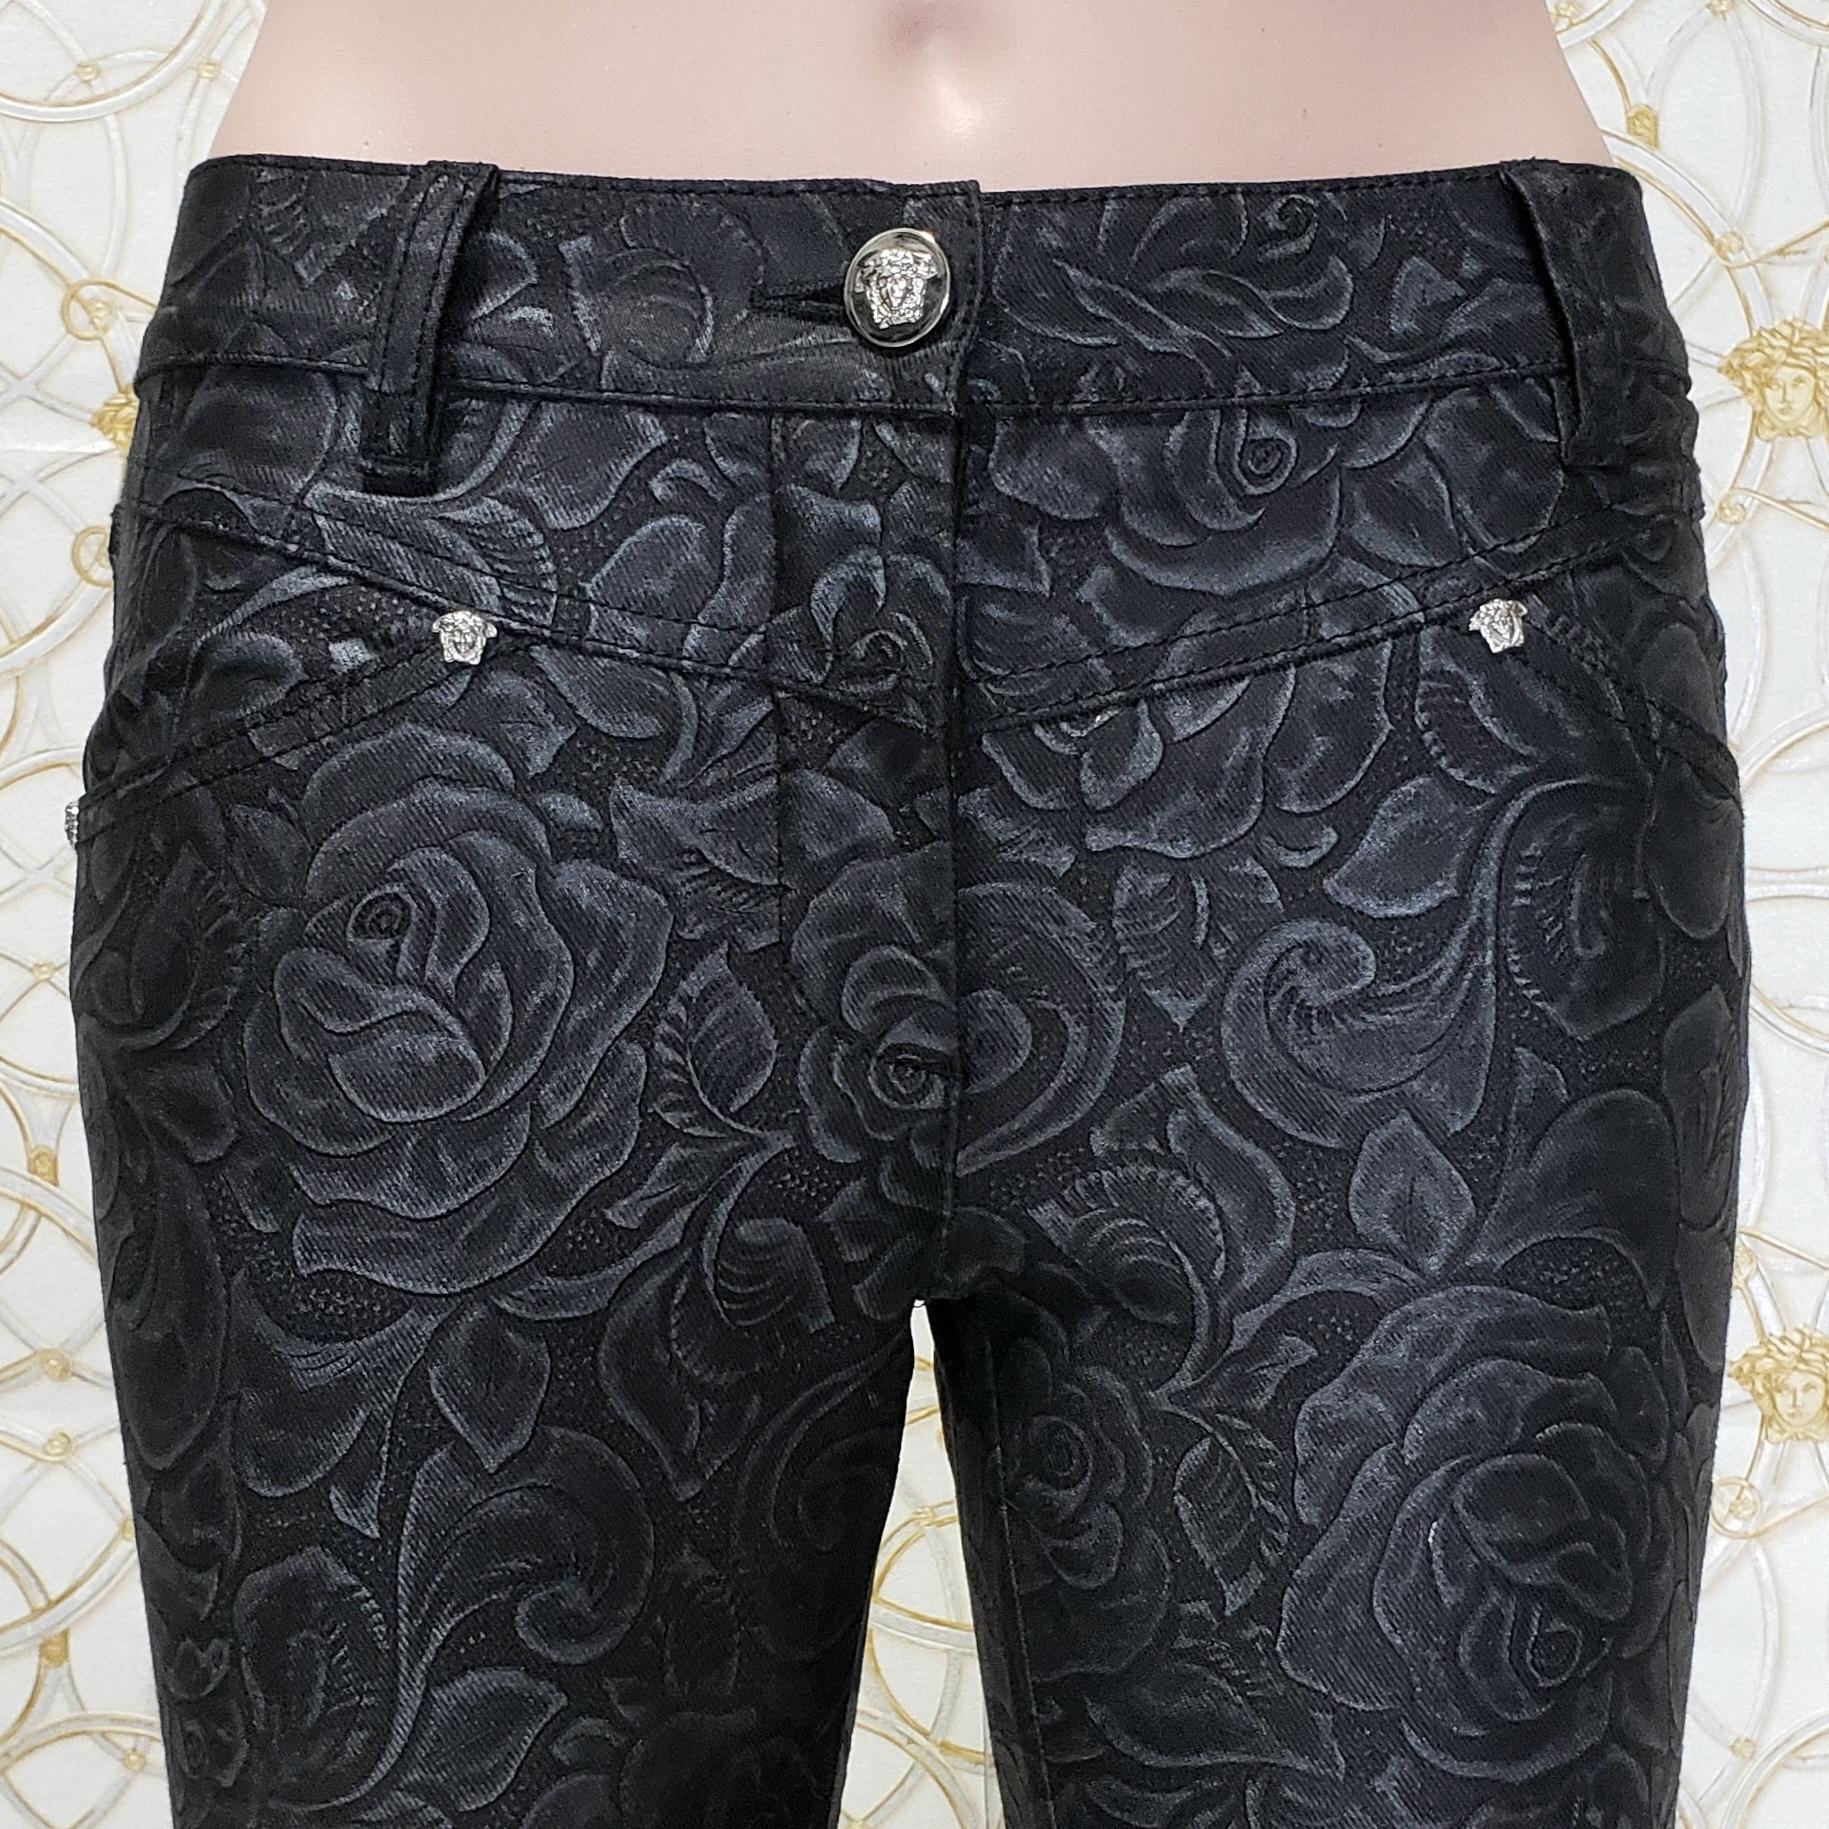 S/S 2014 Look # 5 VERSACE BLACK FLORAL JEANS PANTS size 26 For Sale 1